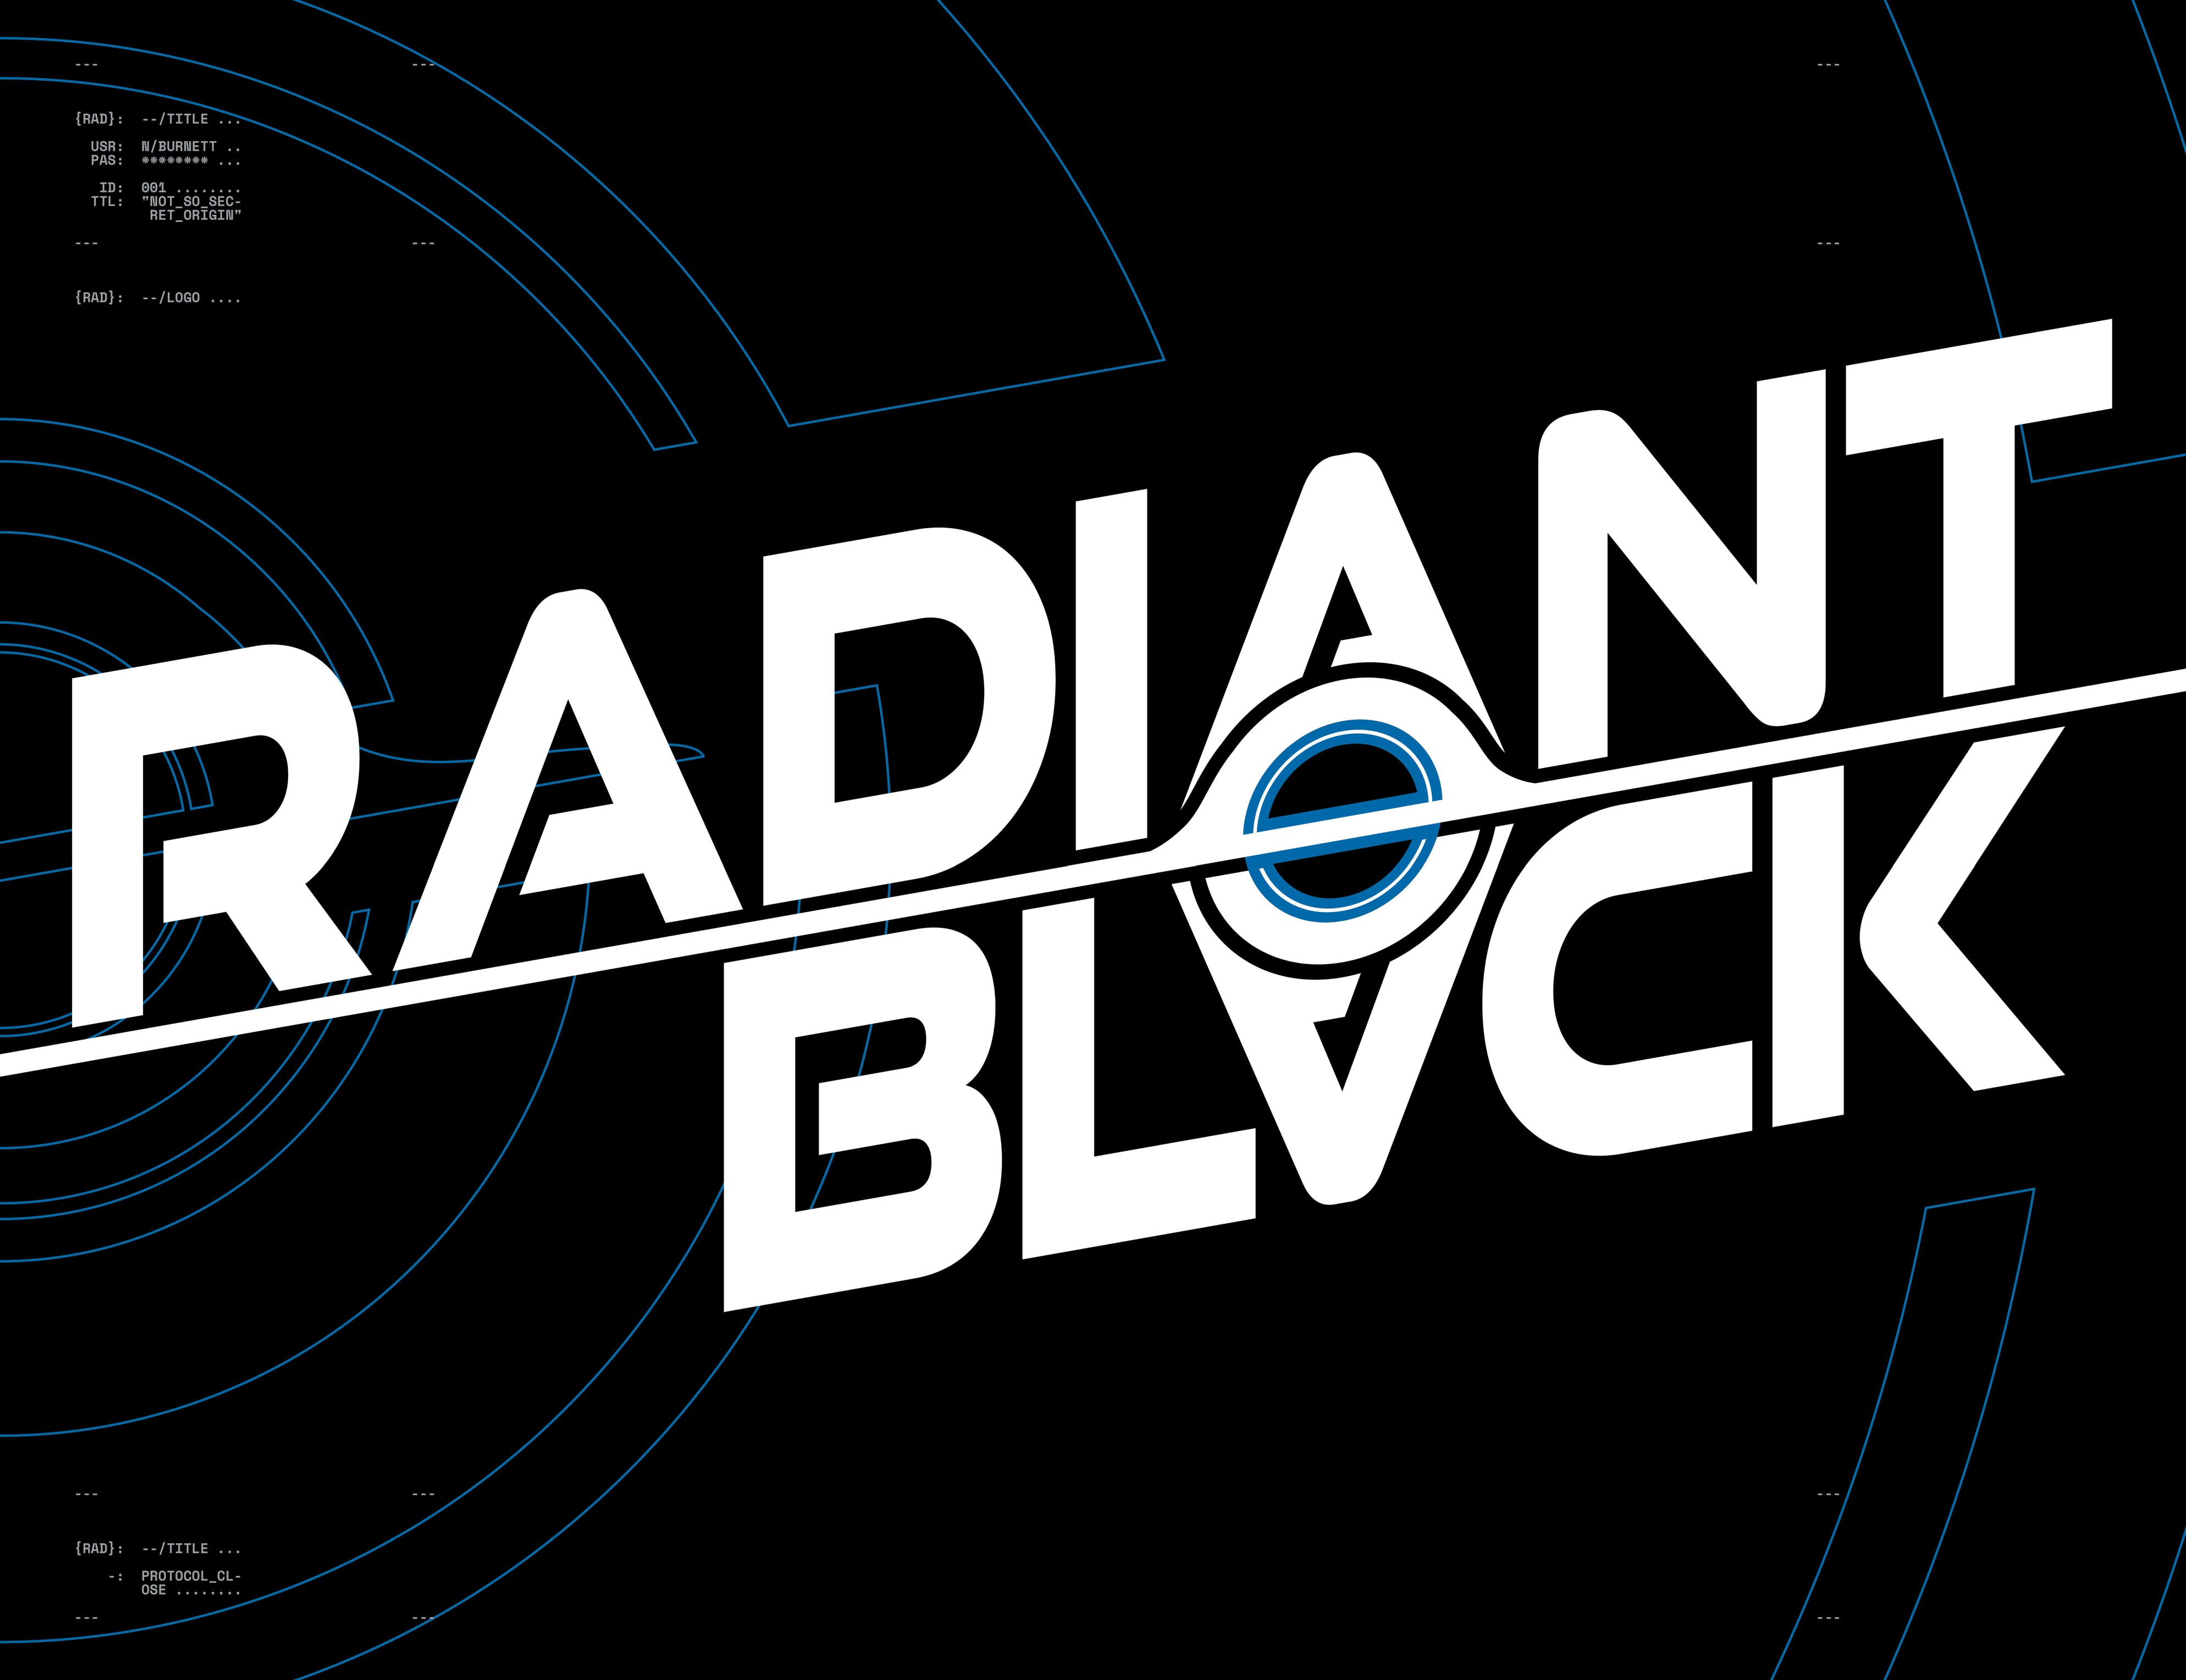 Read online Radiant Black comic -  Issue #1 - 6